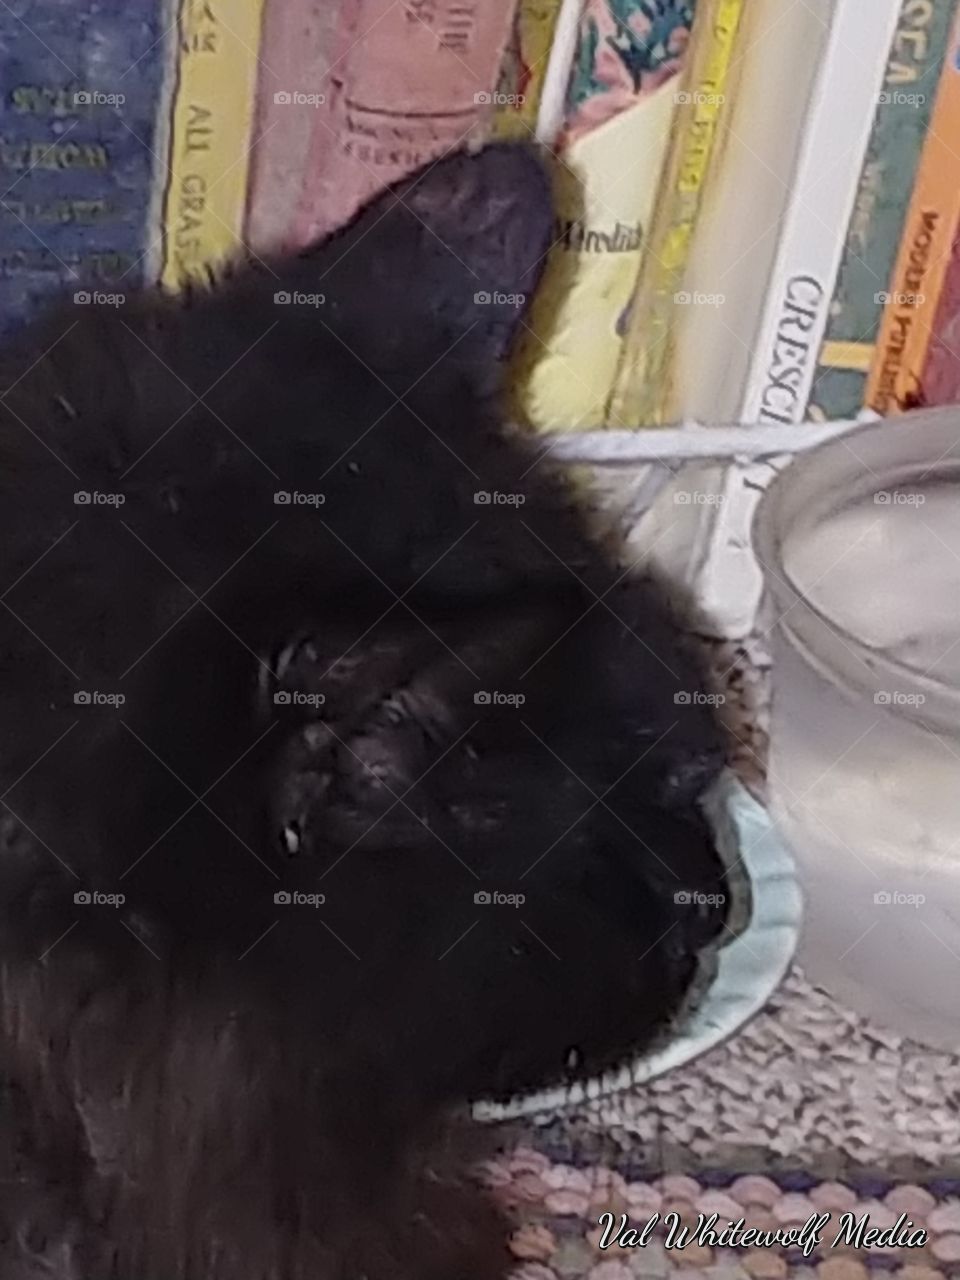 black cat sitting books bowls